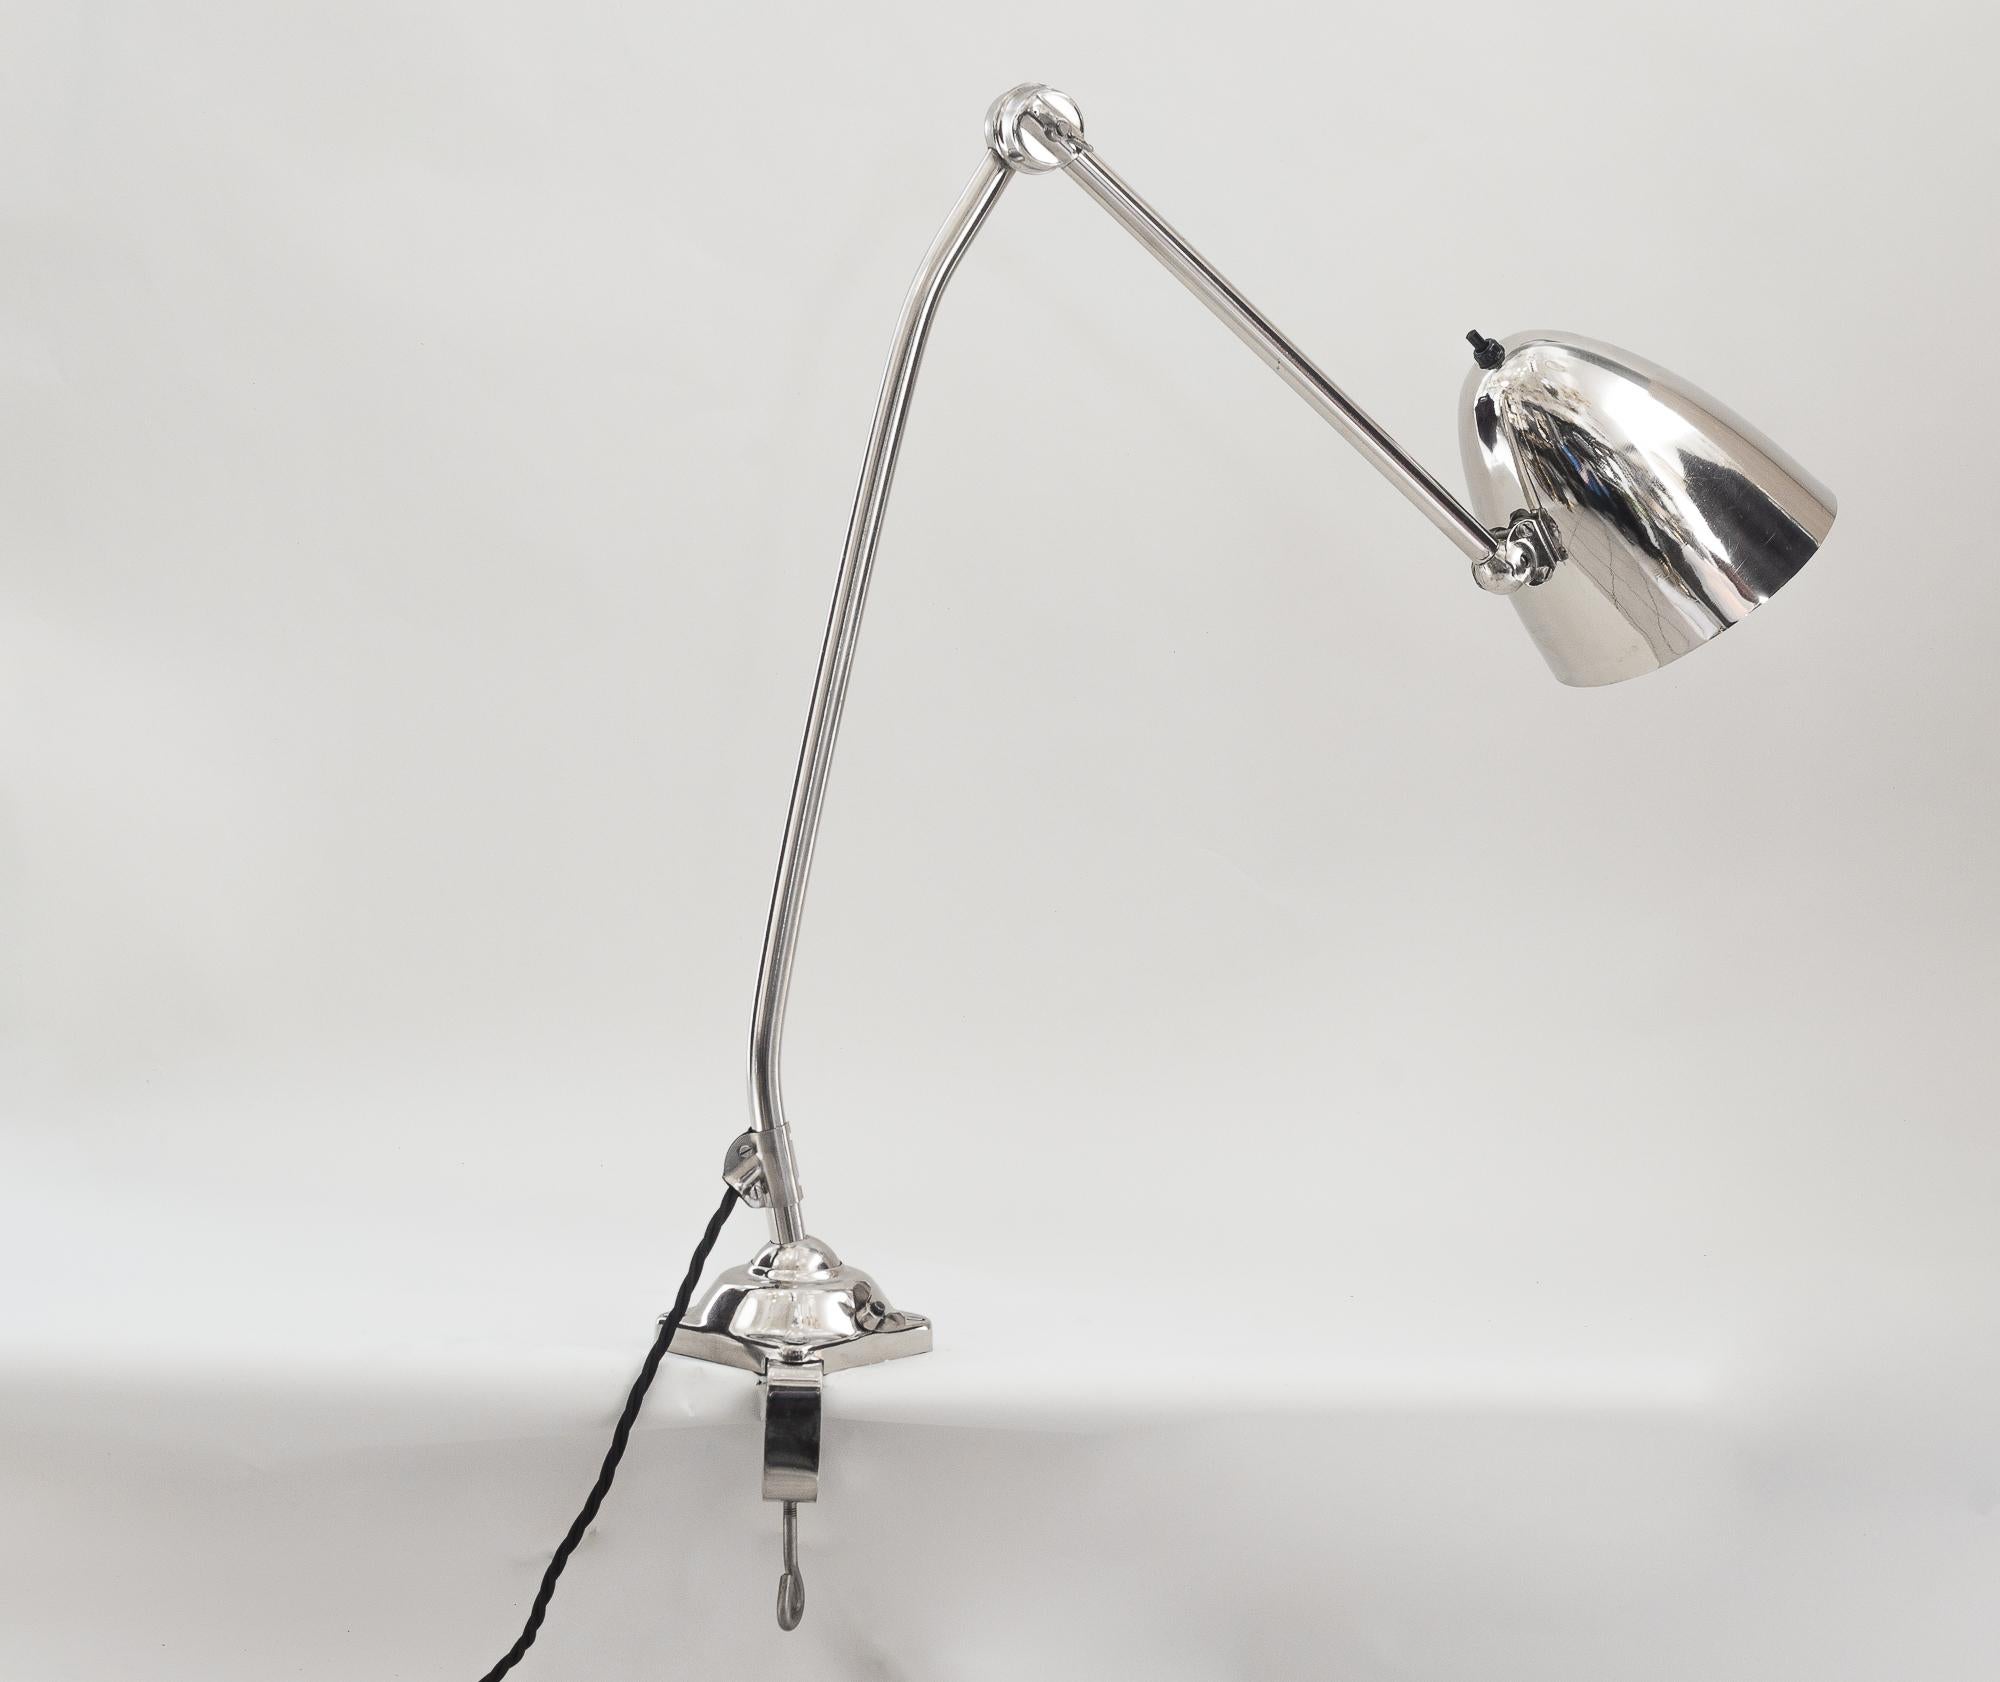 Nickel-plated Art Deco clamp lamp, Vienna, around 1920s
Metal, nickel plated
Original condition.